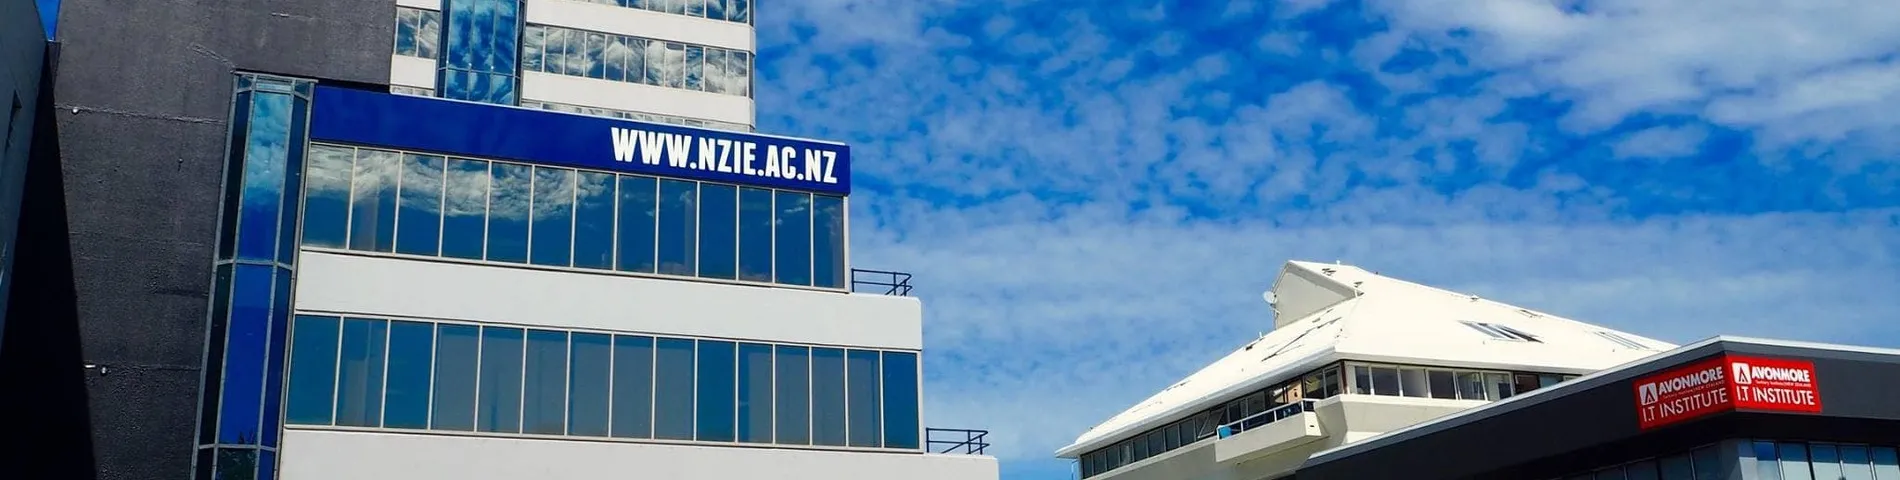 NZIE - New Zealand Institute of Education画像1